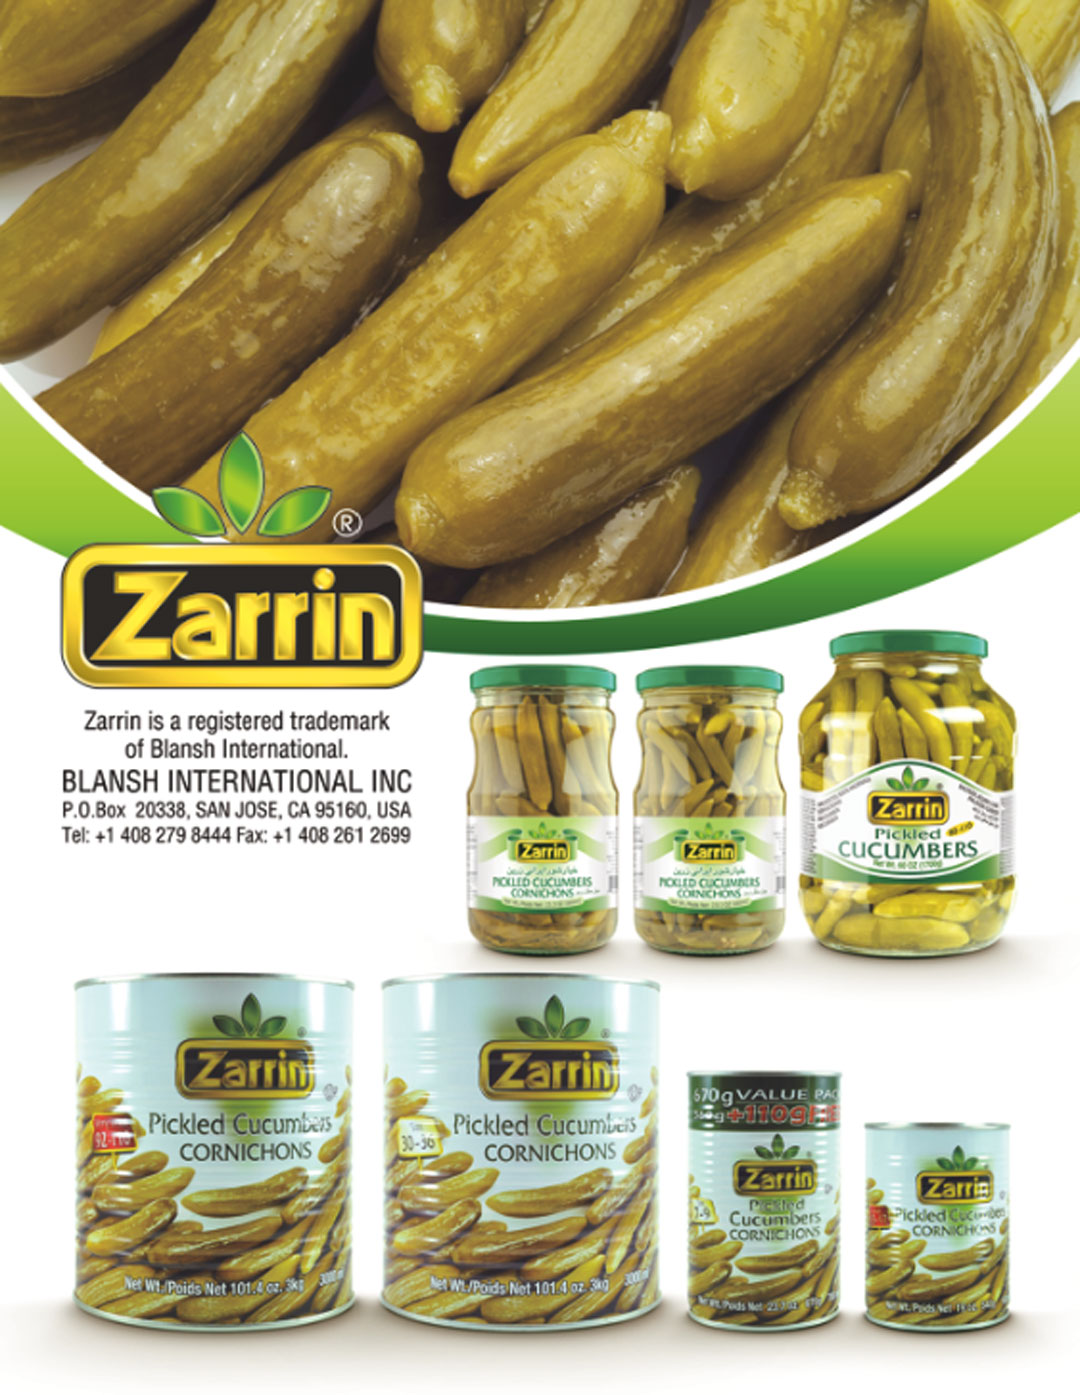 Food distributor, Zarrin, turkish pickled cucumbers, pepperoncini, and cornichons.